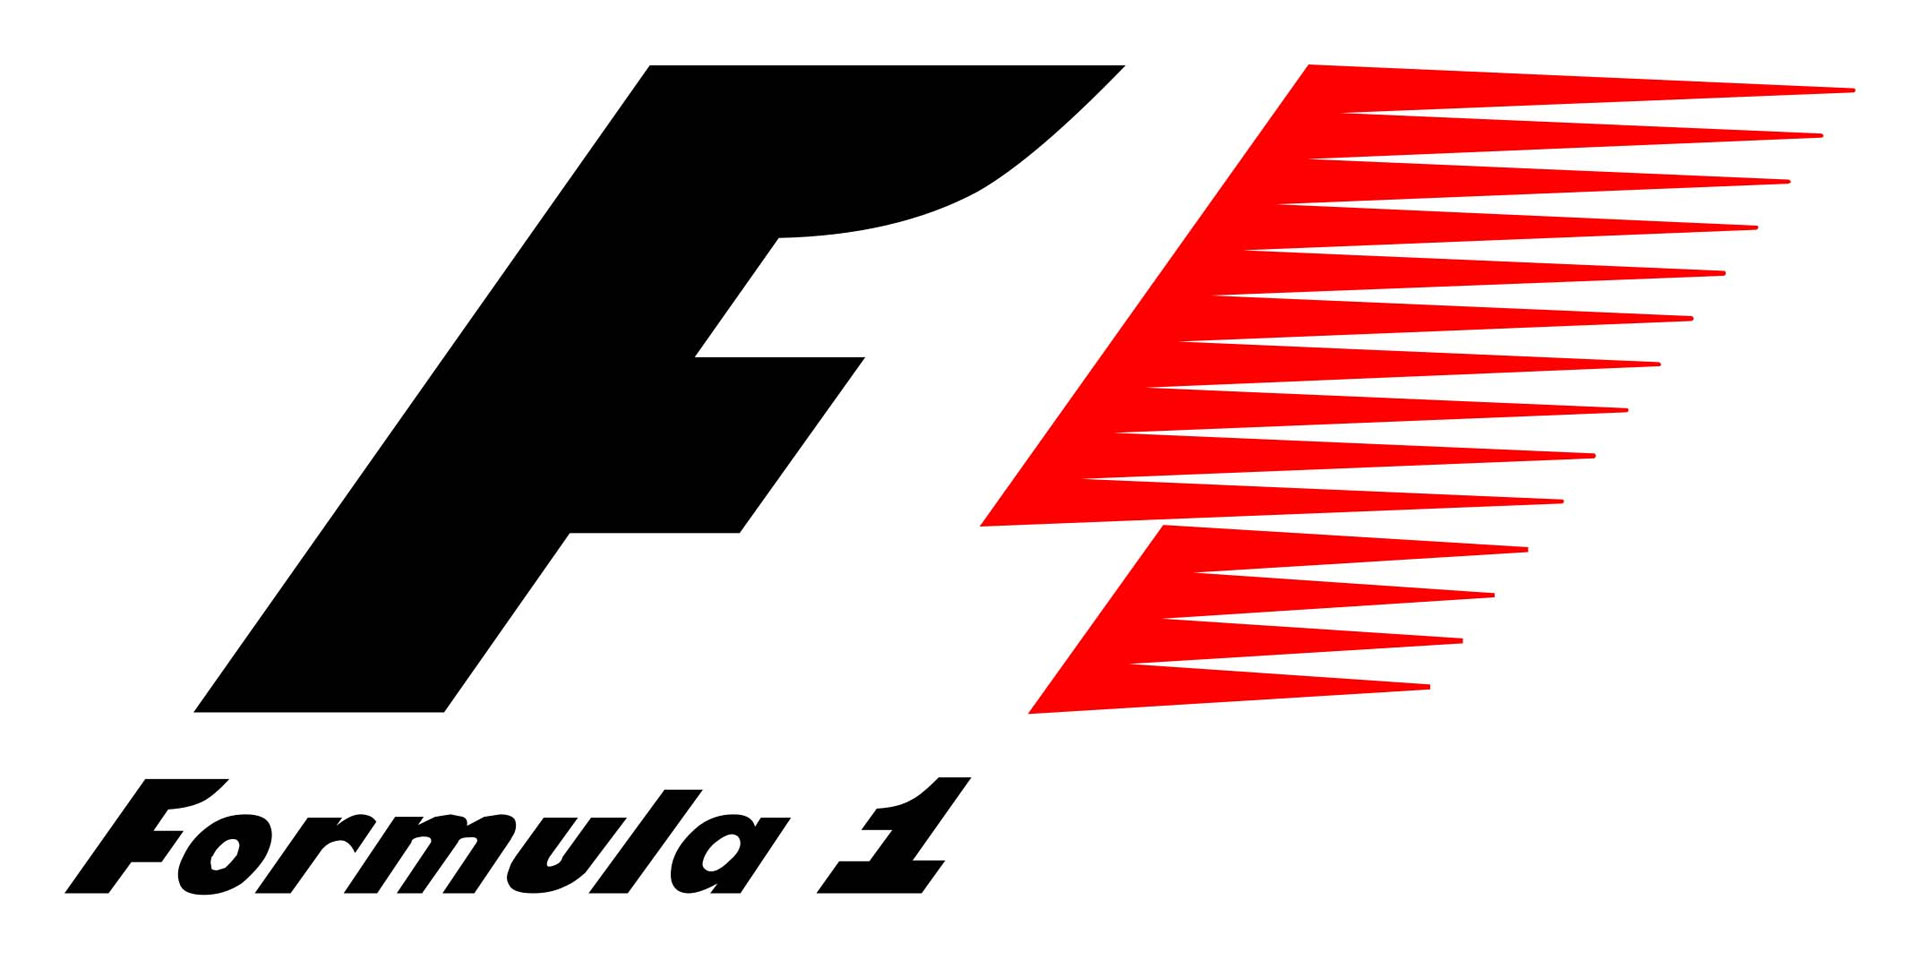 TSN Delivers Comprehensive Coverage of the 2018 FIA FORMULA ONE